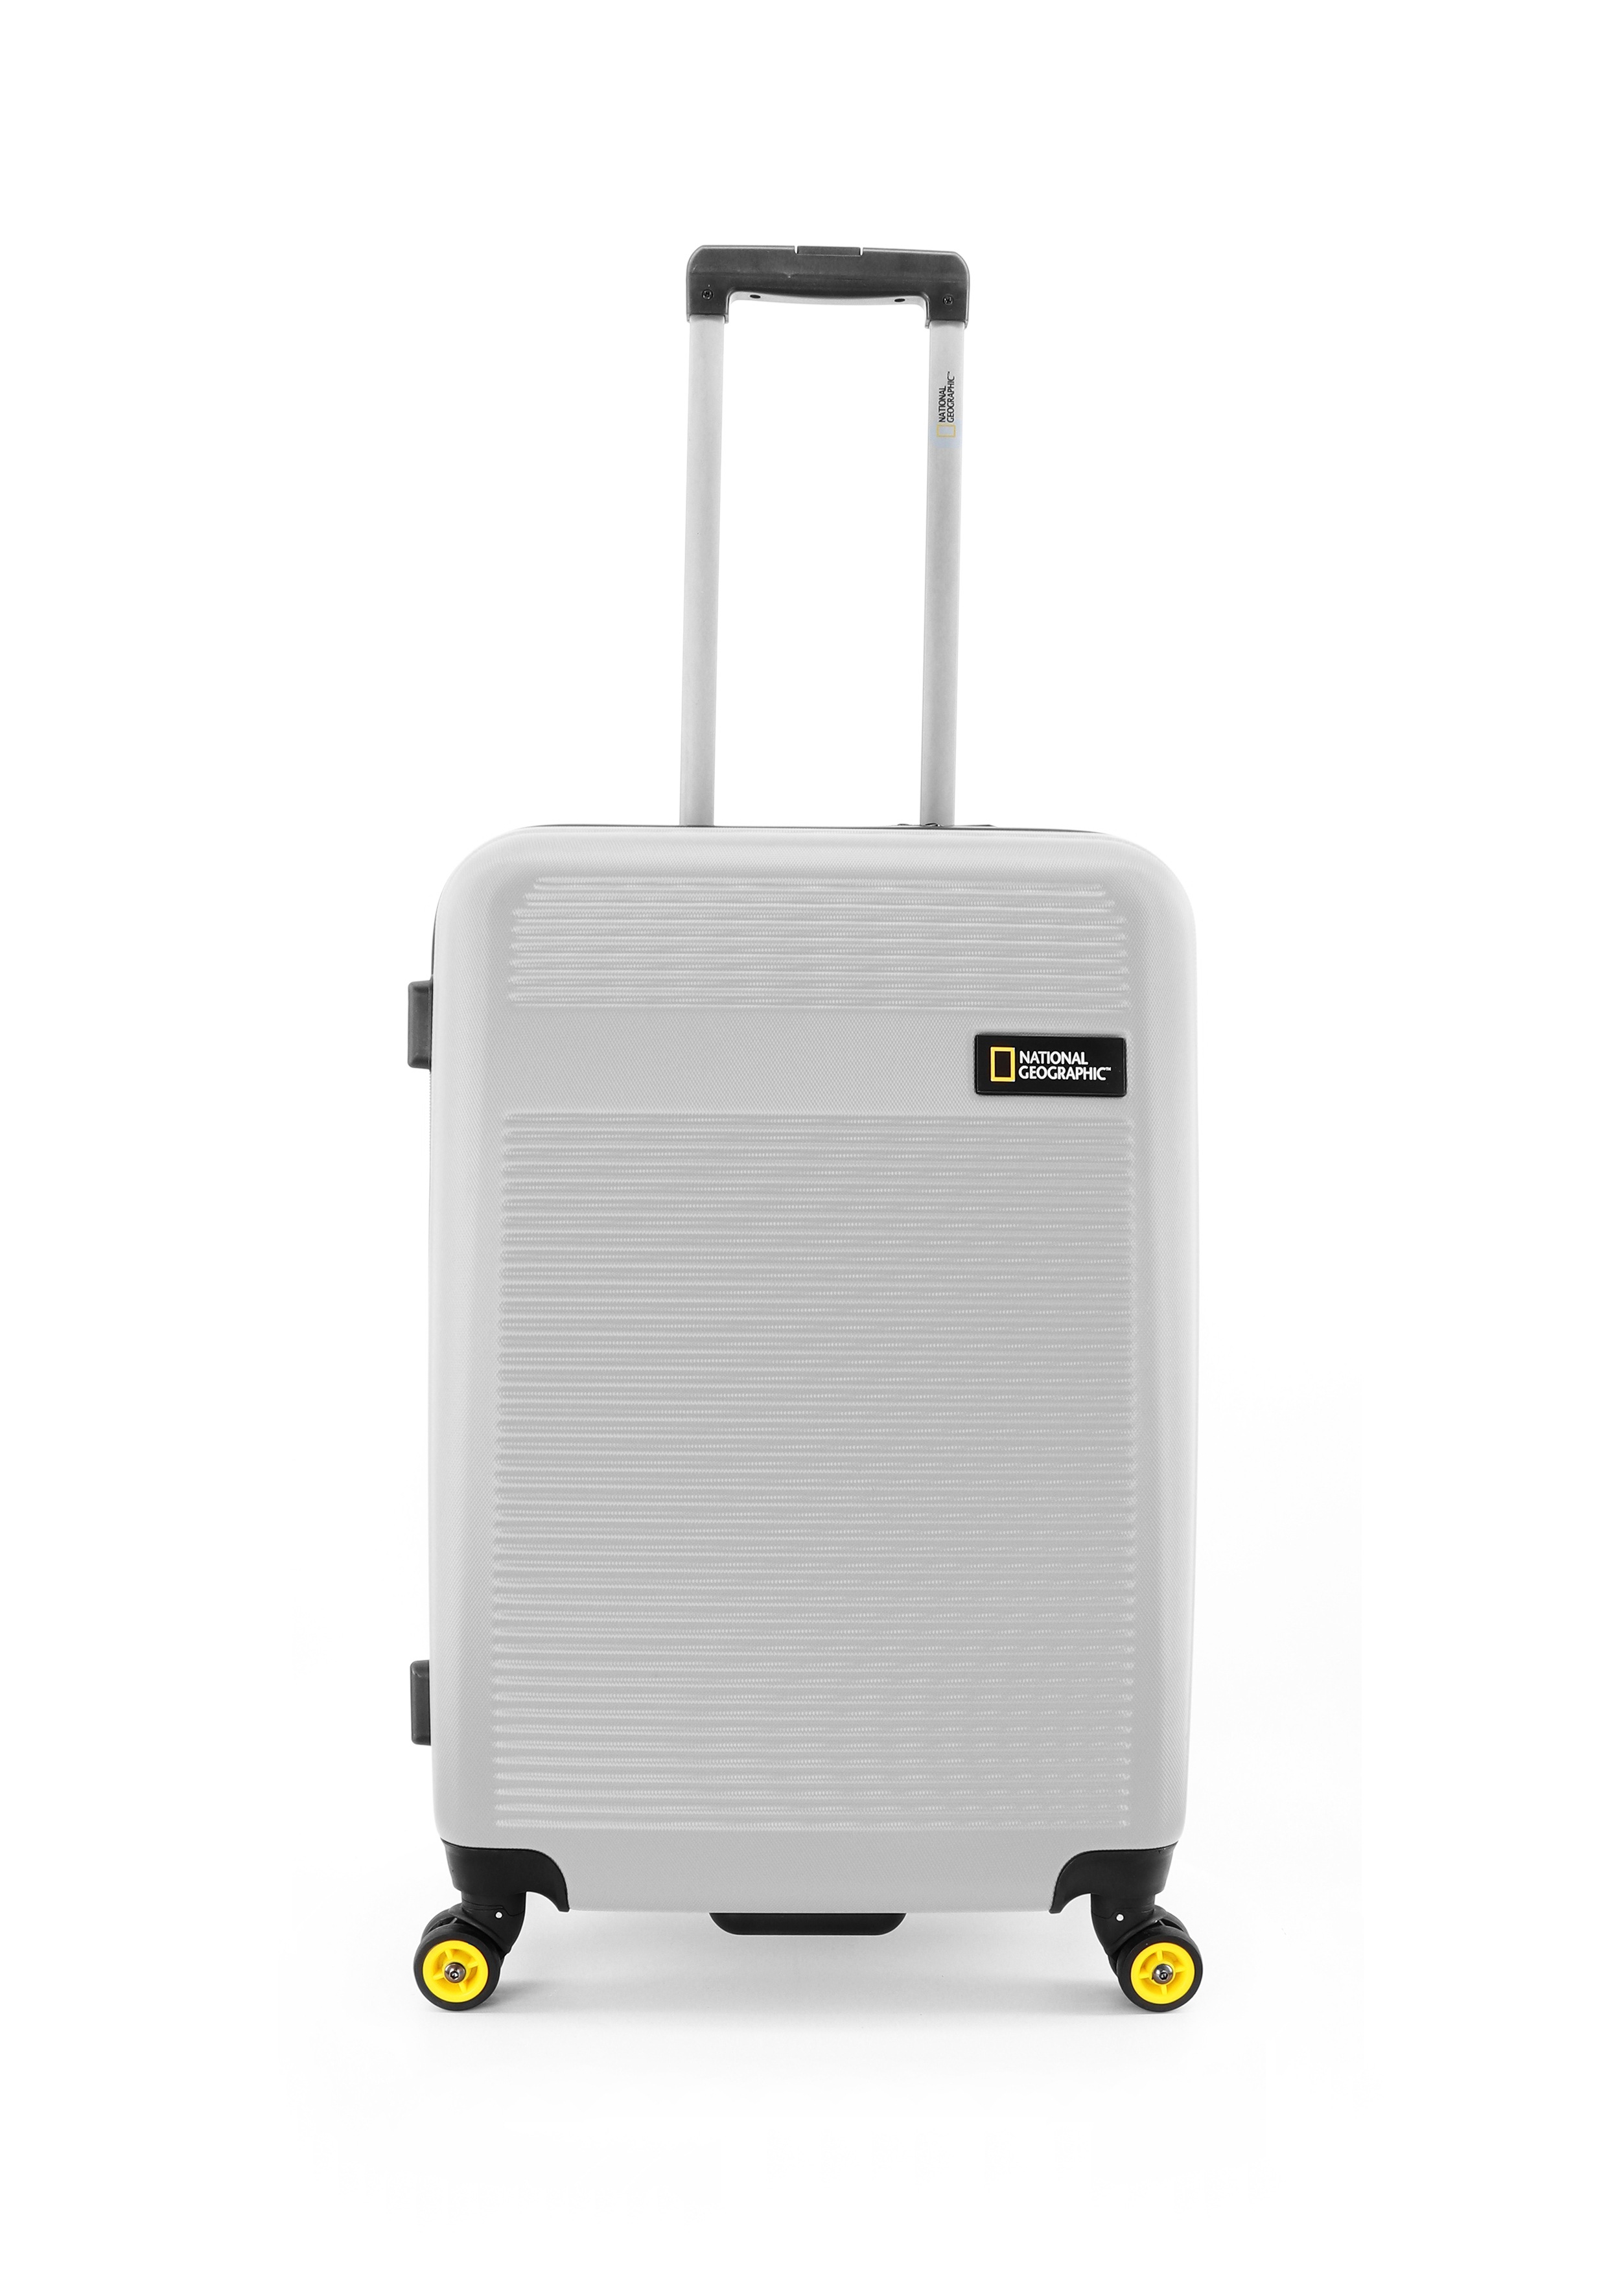 National Geographic Spinner Koffer, 4 Doppelrollen, Zahlenschloss Zoll Gr. S, M, L, dreier Set, Aerodrome Trolley (Silver, M 67 cm)